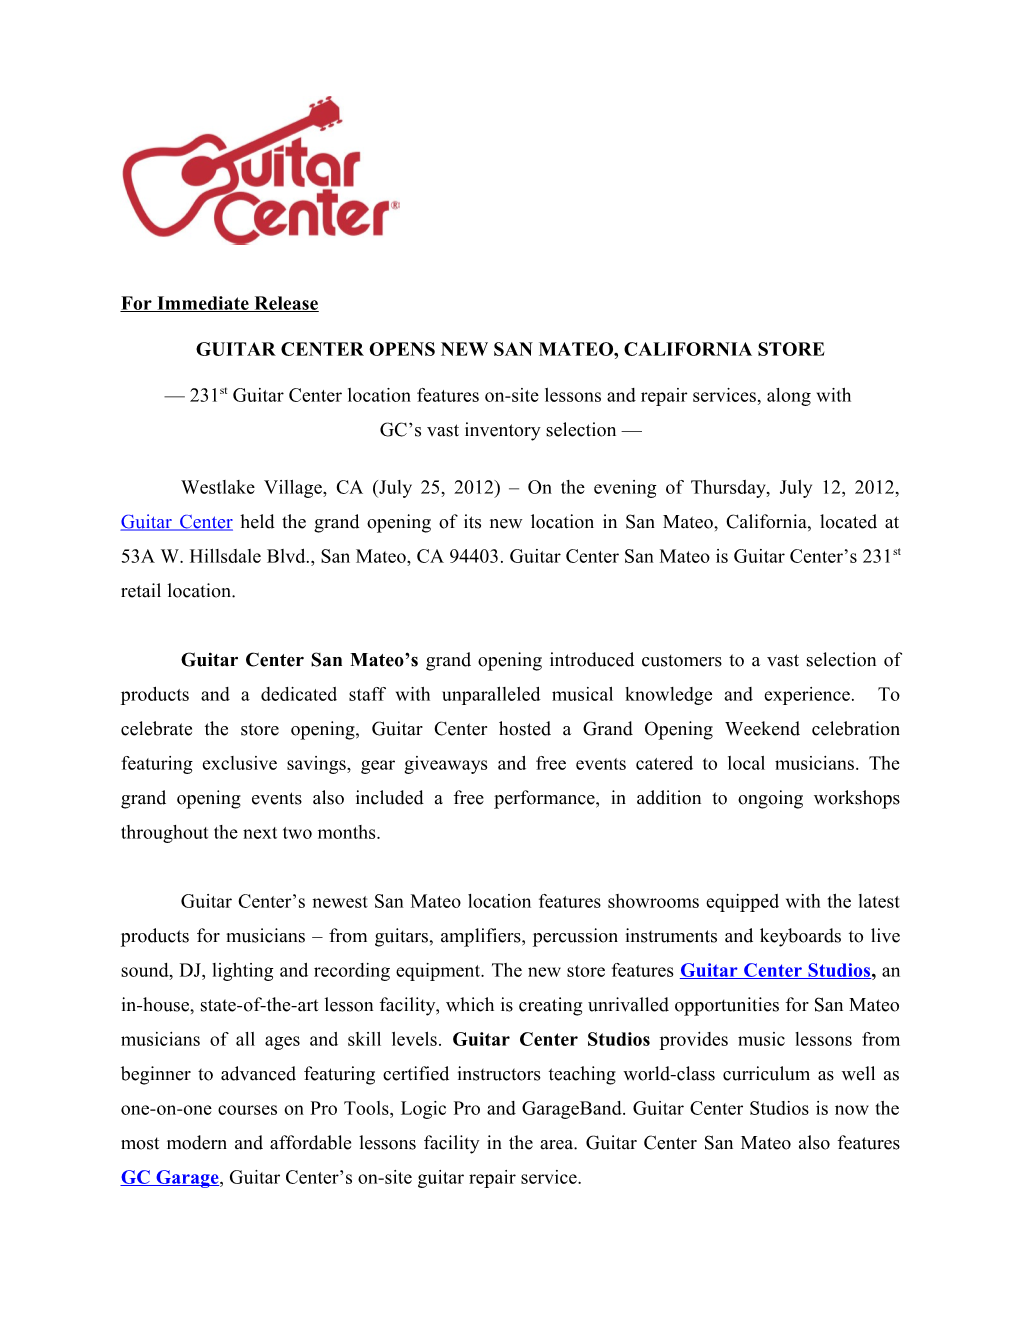 Guitar Center Opens New San Mateo, California Store